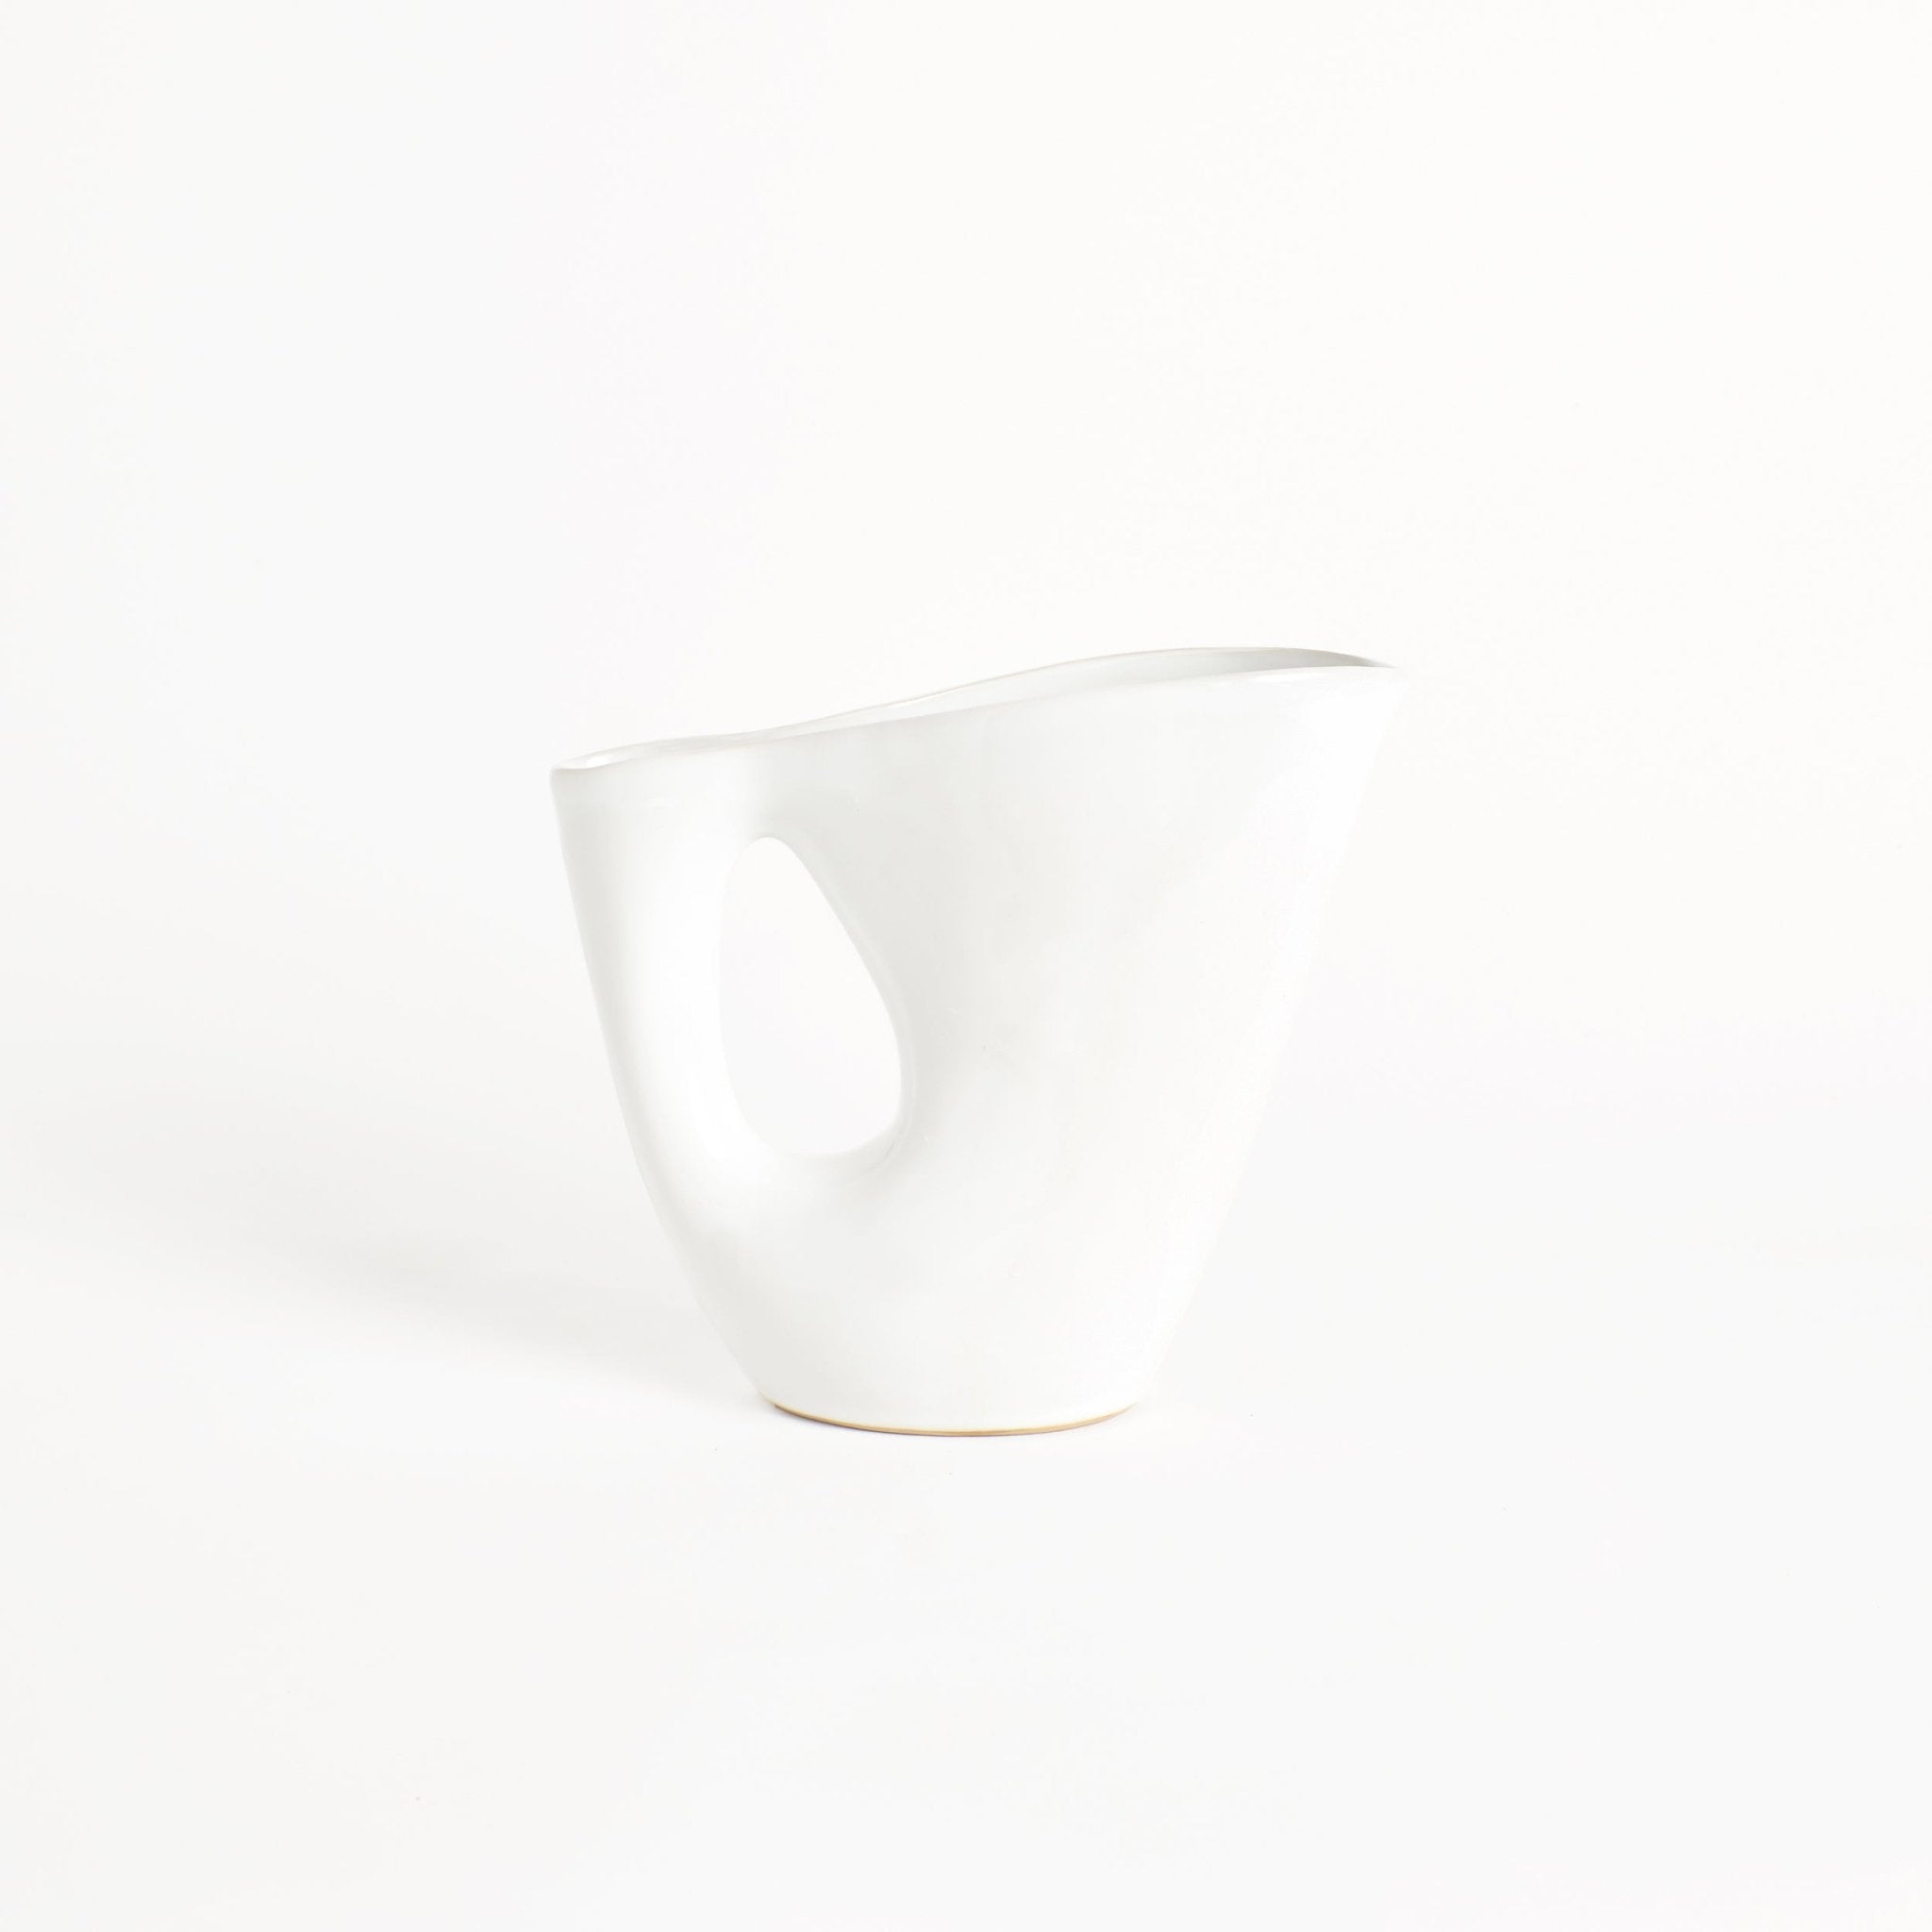 Mamasita Jug - White vase by Project 213A